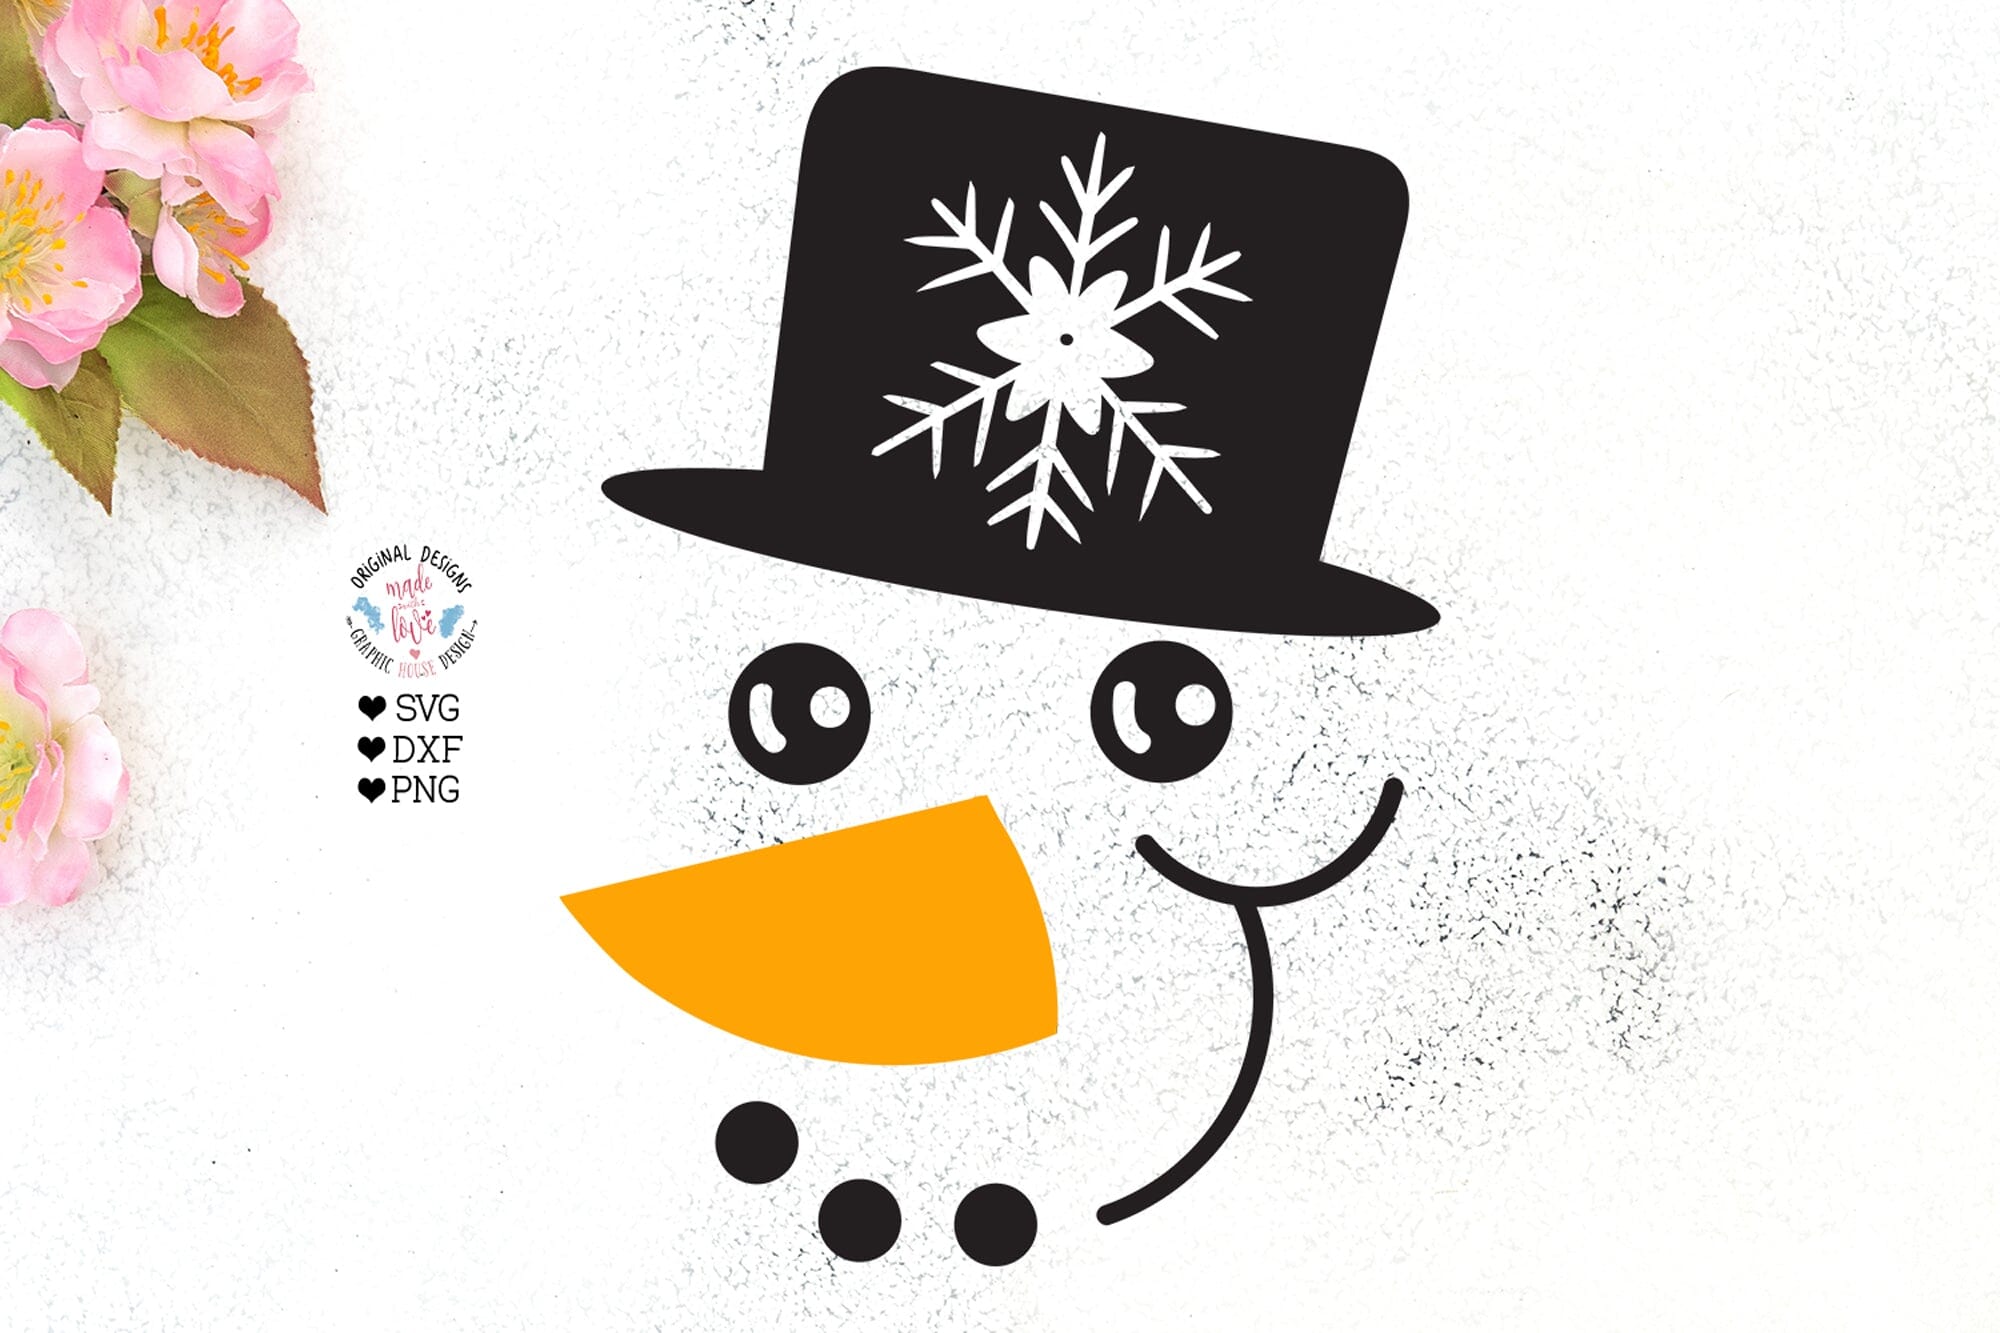 Snowman Face - Free Artwork for Ikonart